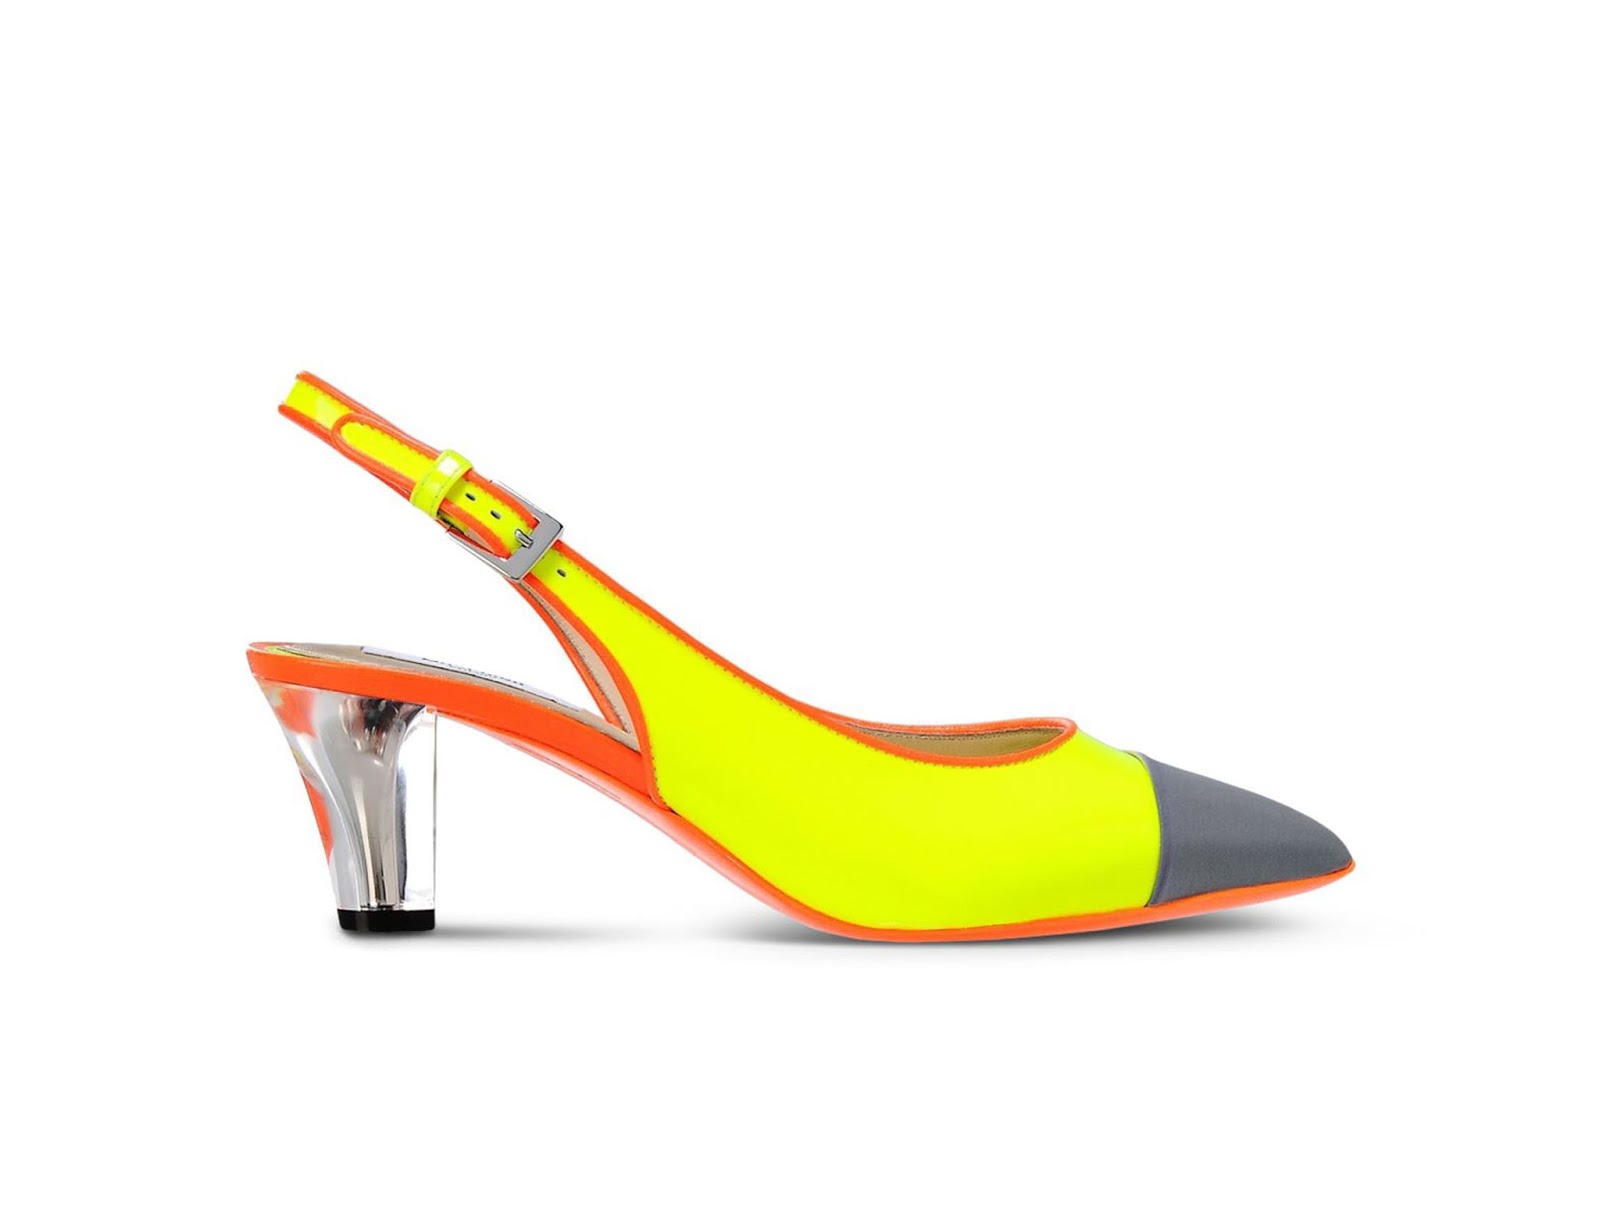 Eniwhere Fashion - Coloured summer shoes